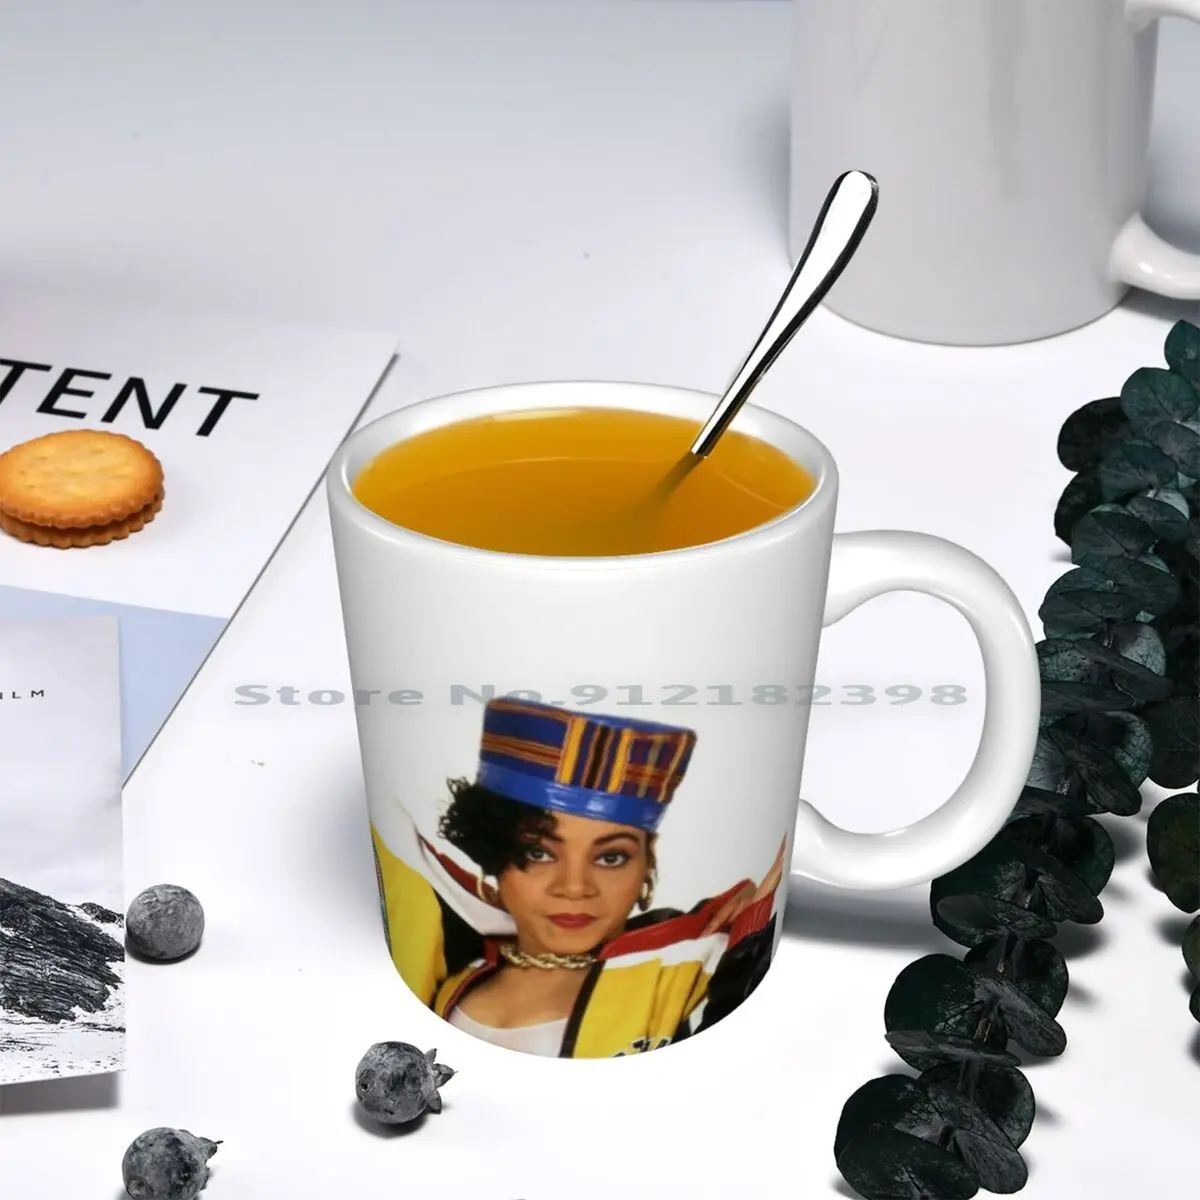 https://ae01.alicdn.com/kf/H99c1d966c1b9482bbfc0cd2ae7ac0c2dh/90-s-Flash-Back-Salt-N-Pepa-Ceramic-Mugs-Coffee-Cups-Milk-Tea-Mug-90s-Hiphop.jpg